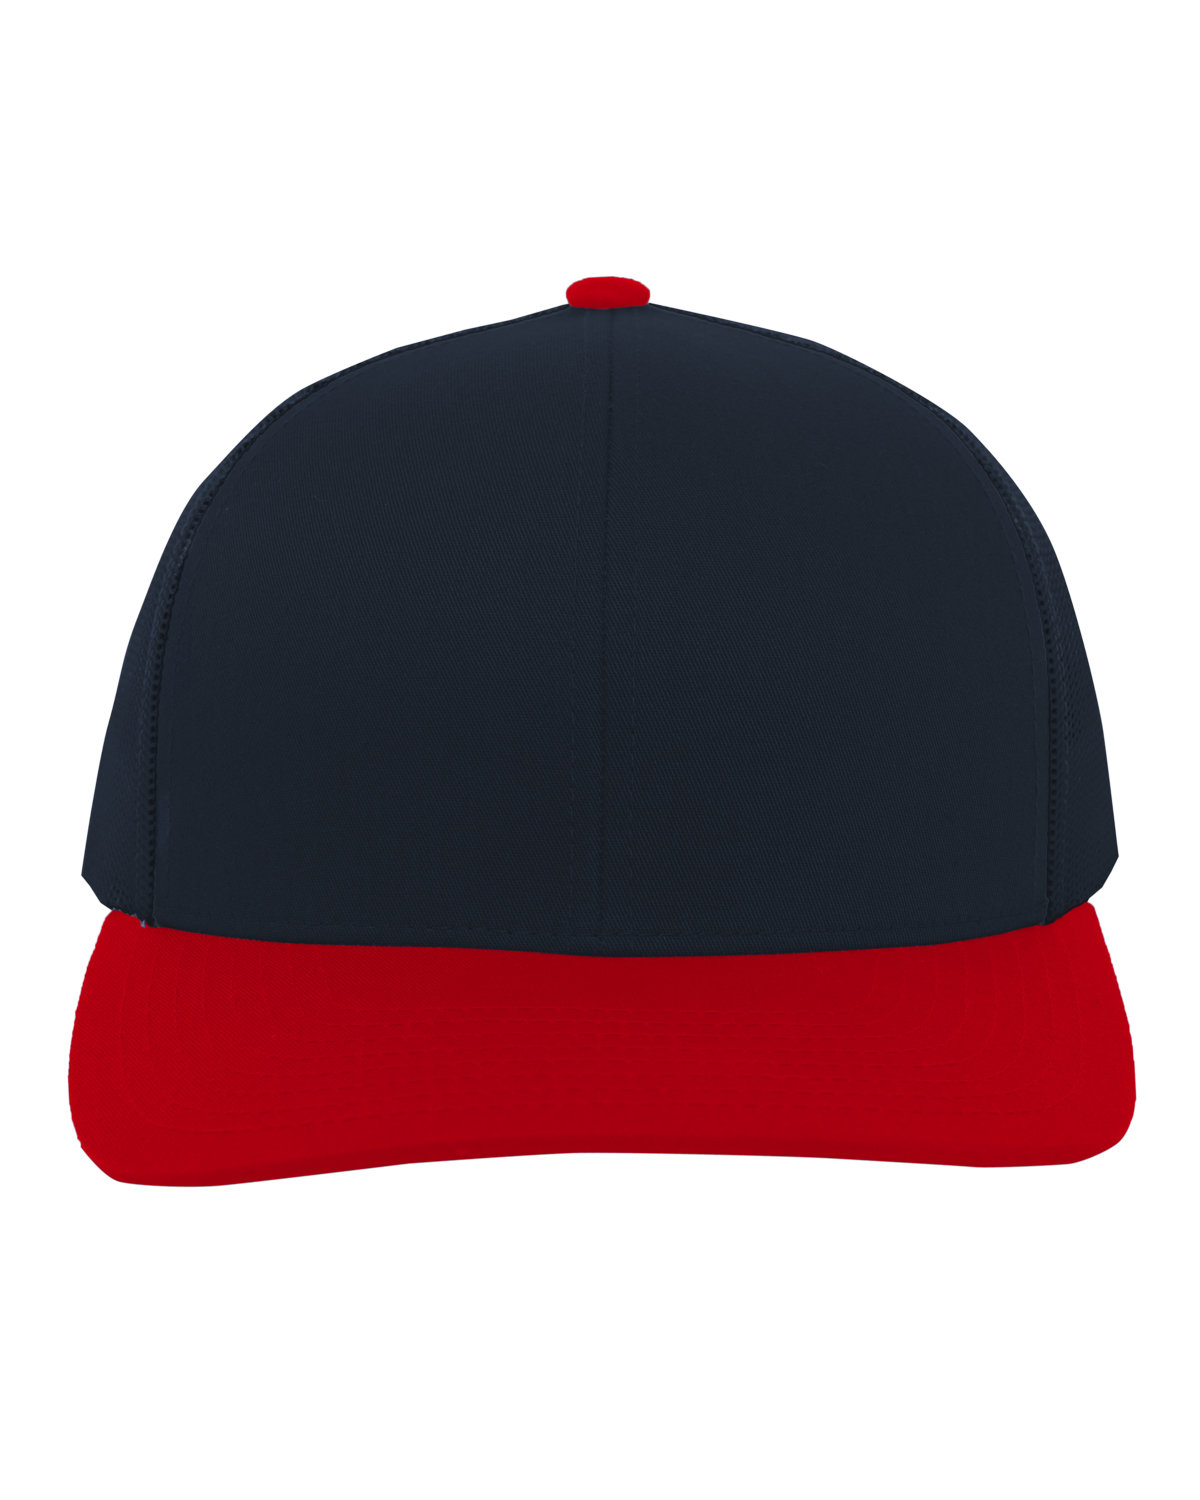 Pacific Headwear Trucker Snapback Hat NAVY/ RED/ NAVY 